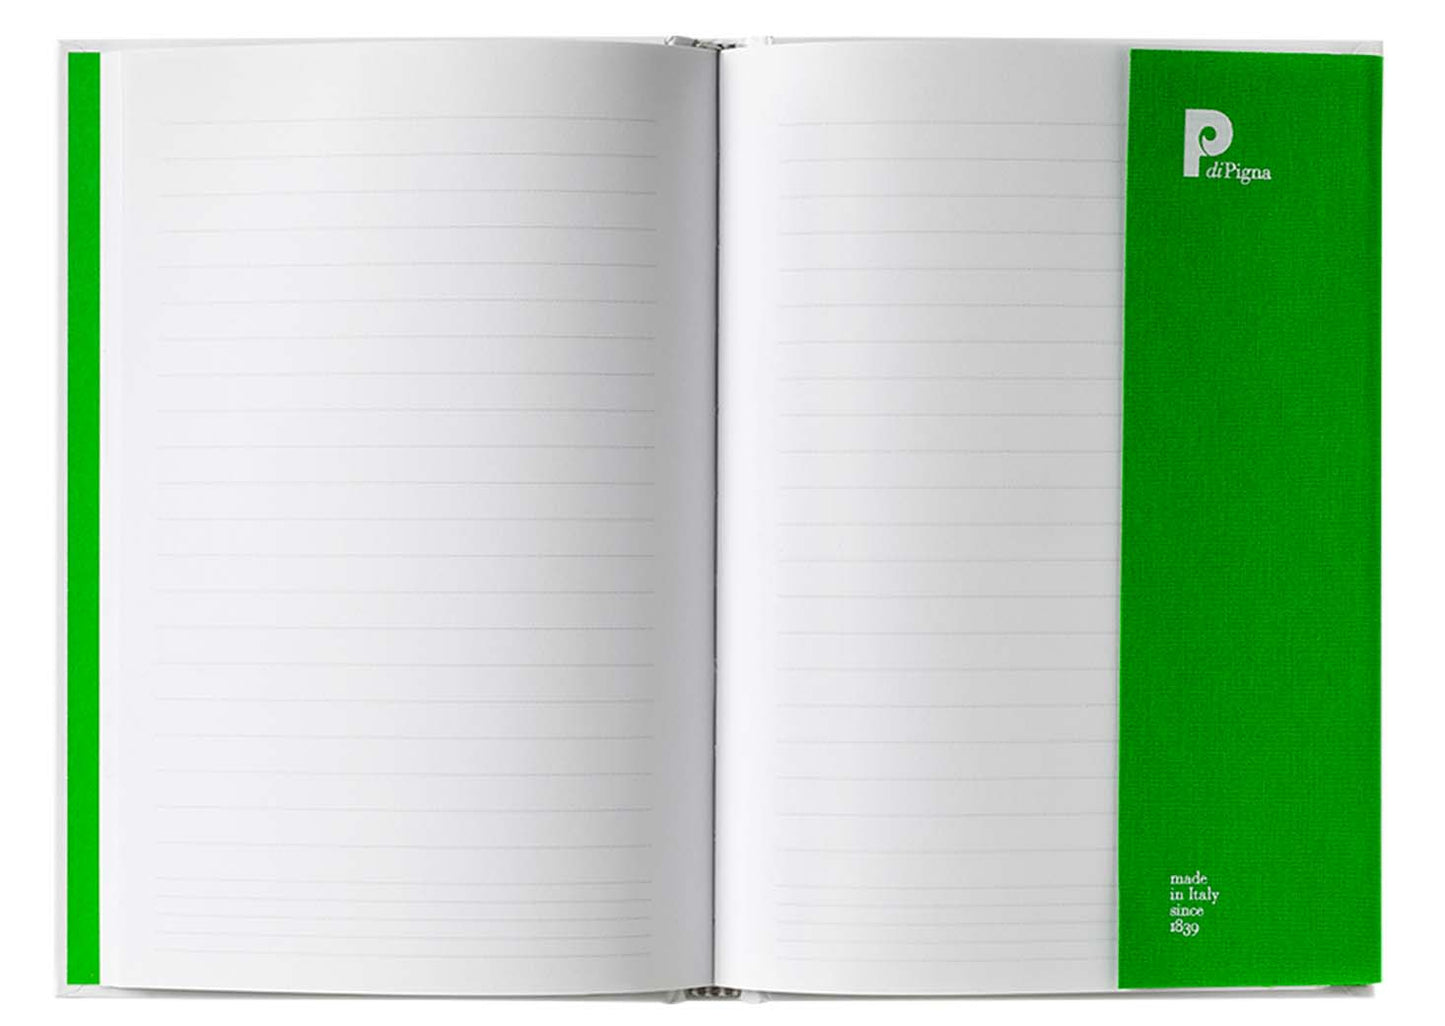 Enzo Mari Tribute Notebook - Soft Cover